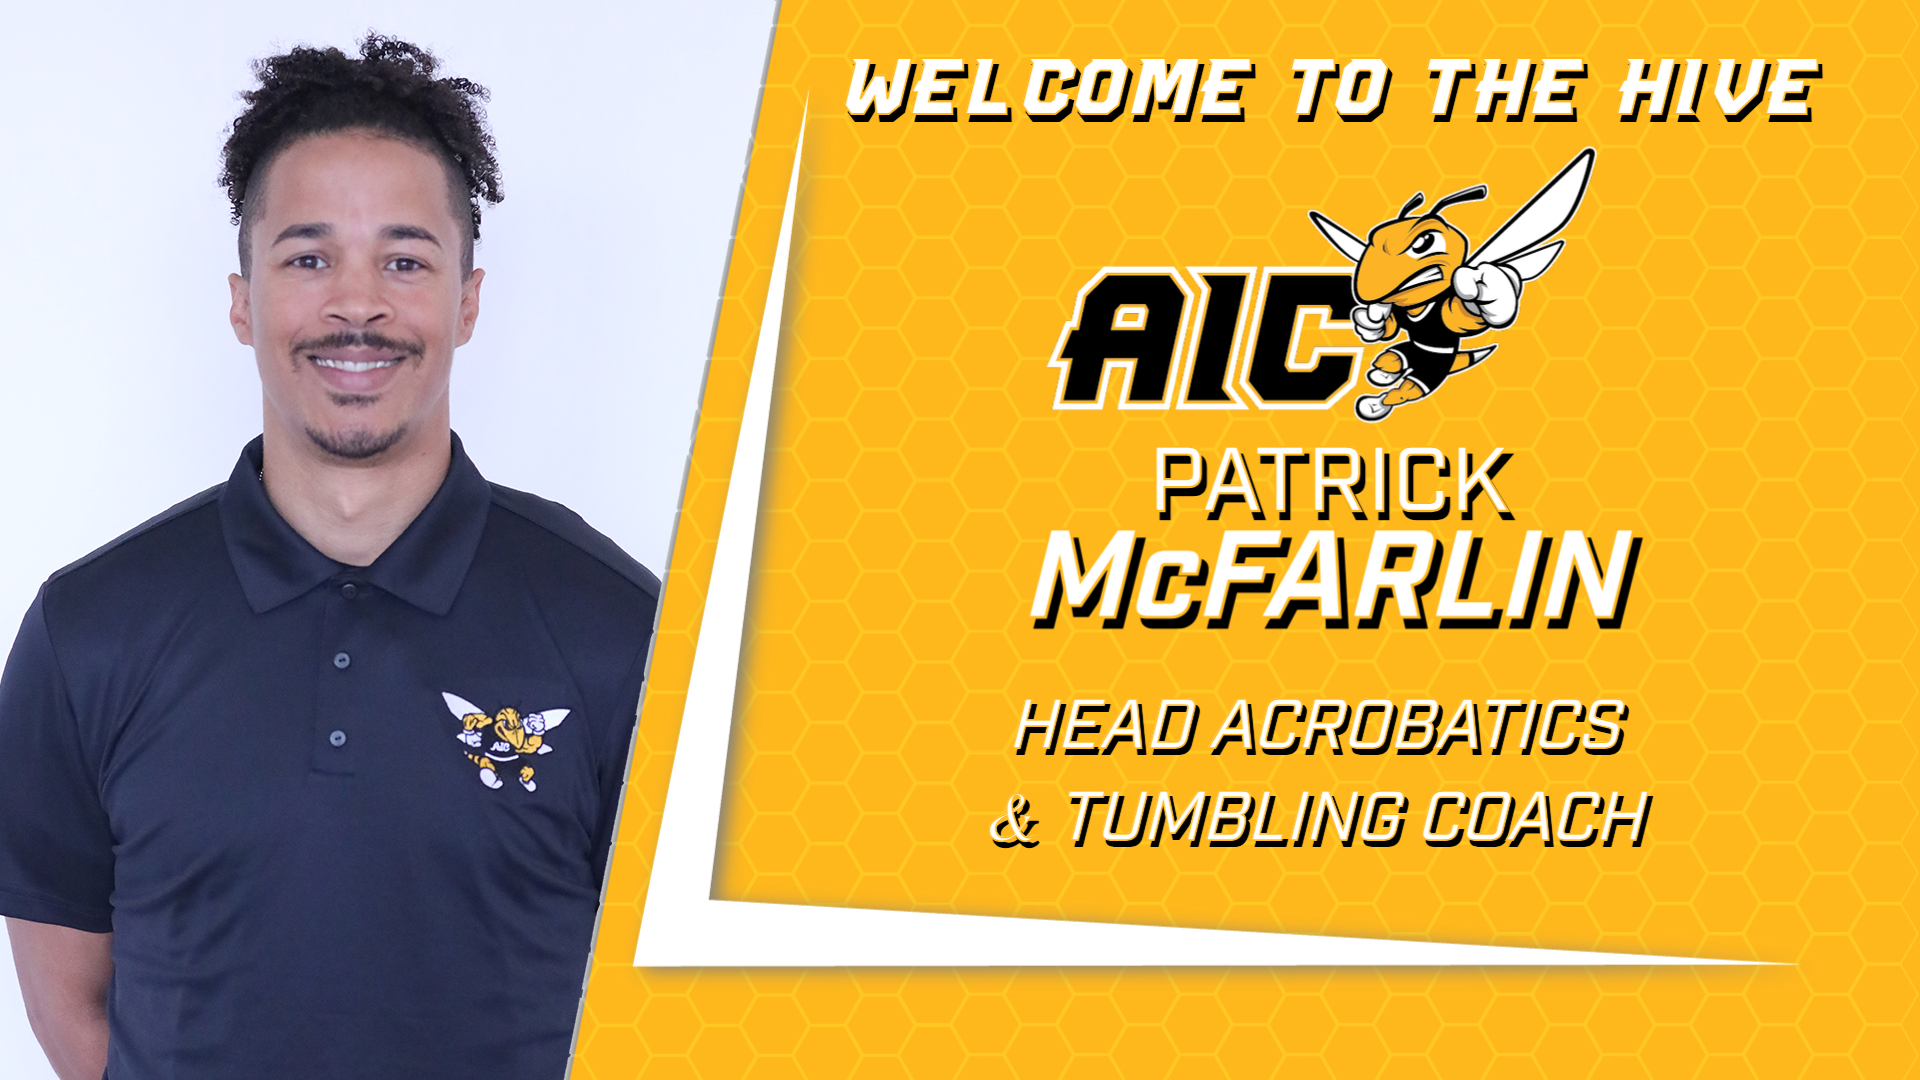 McFarlin named first Acrobatics & Tumbling Head Coach